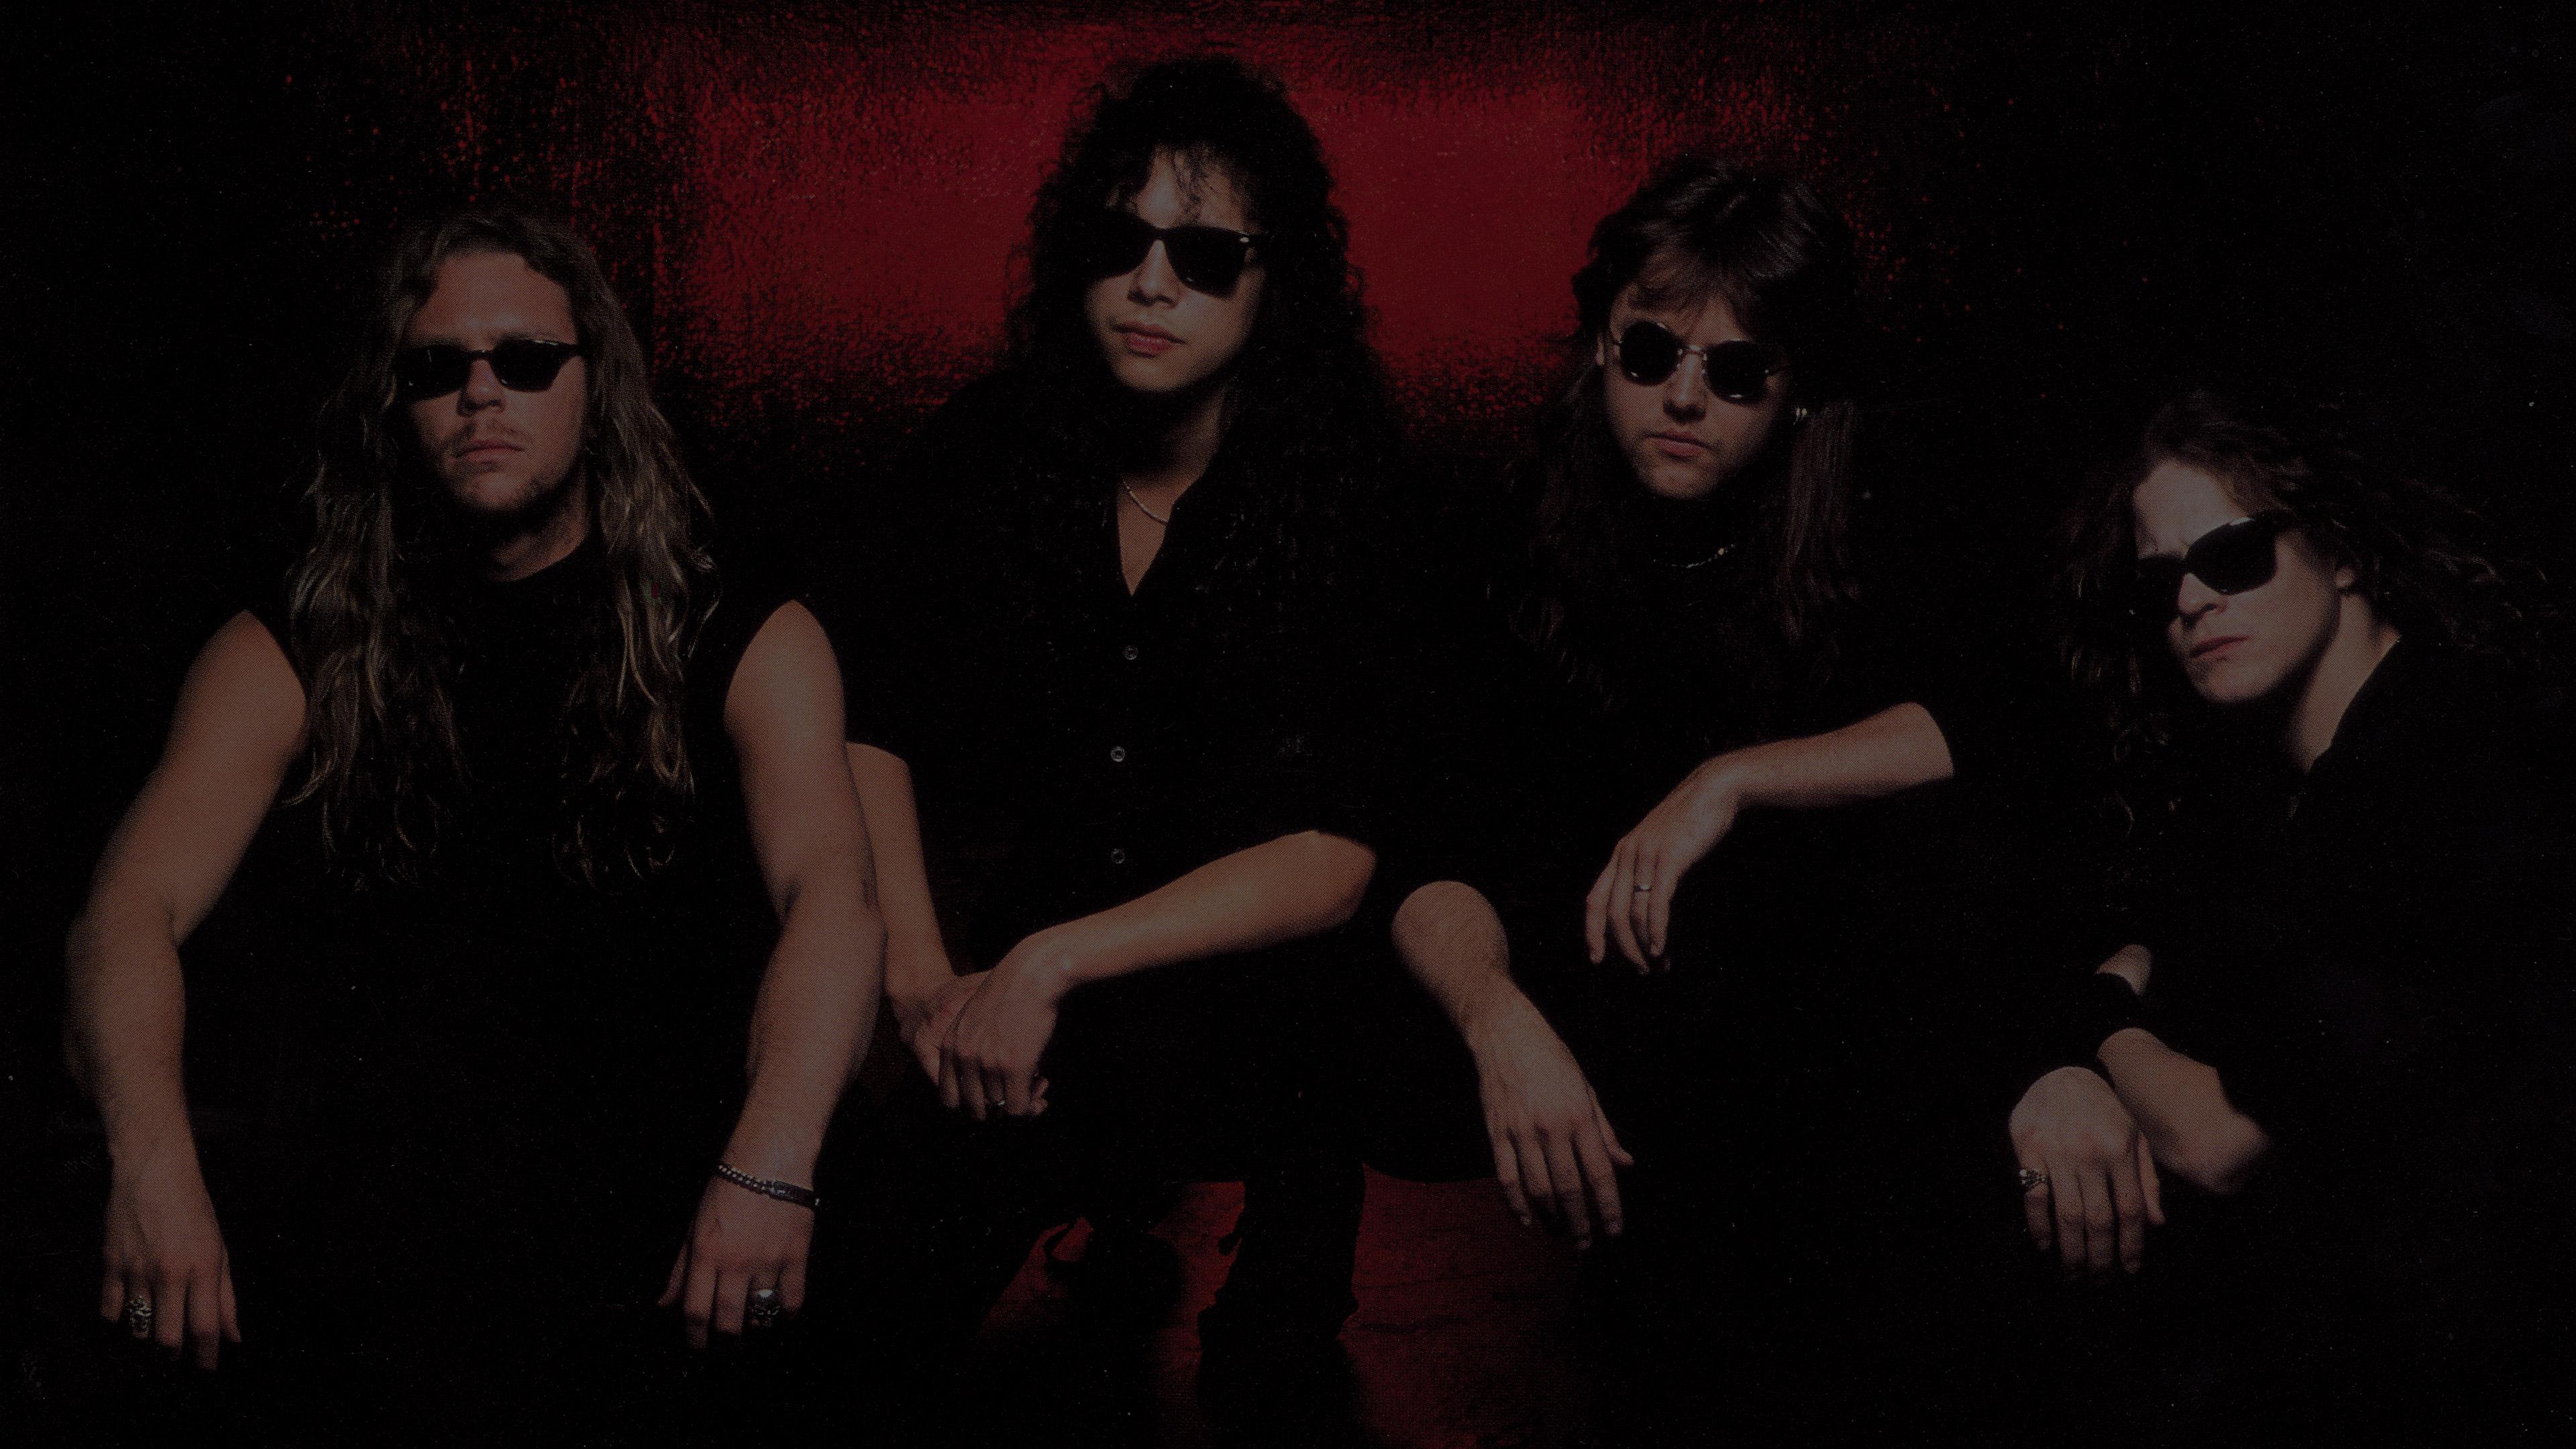 Banner Image for Metallica's Song "Eye of the Beholder"